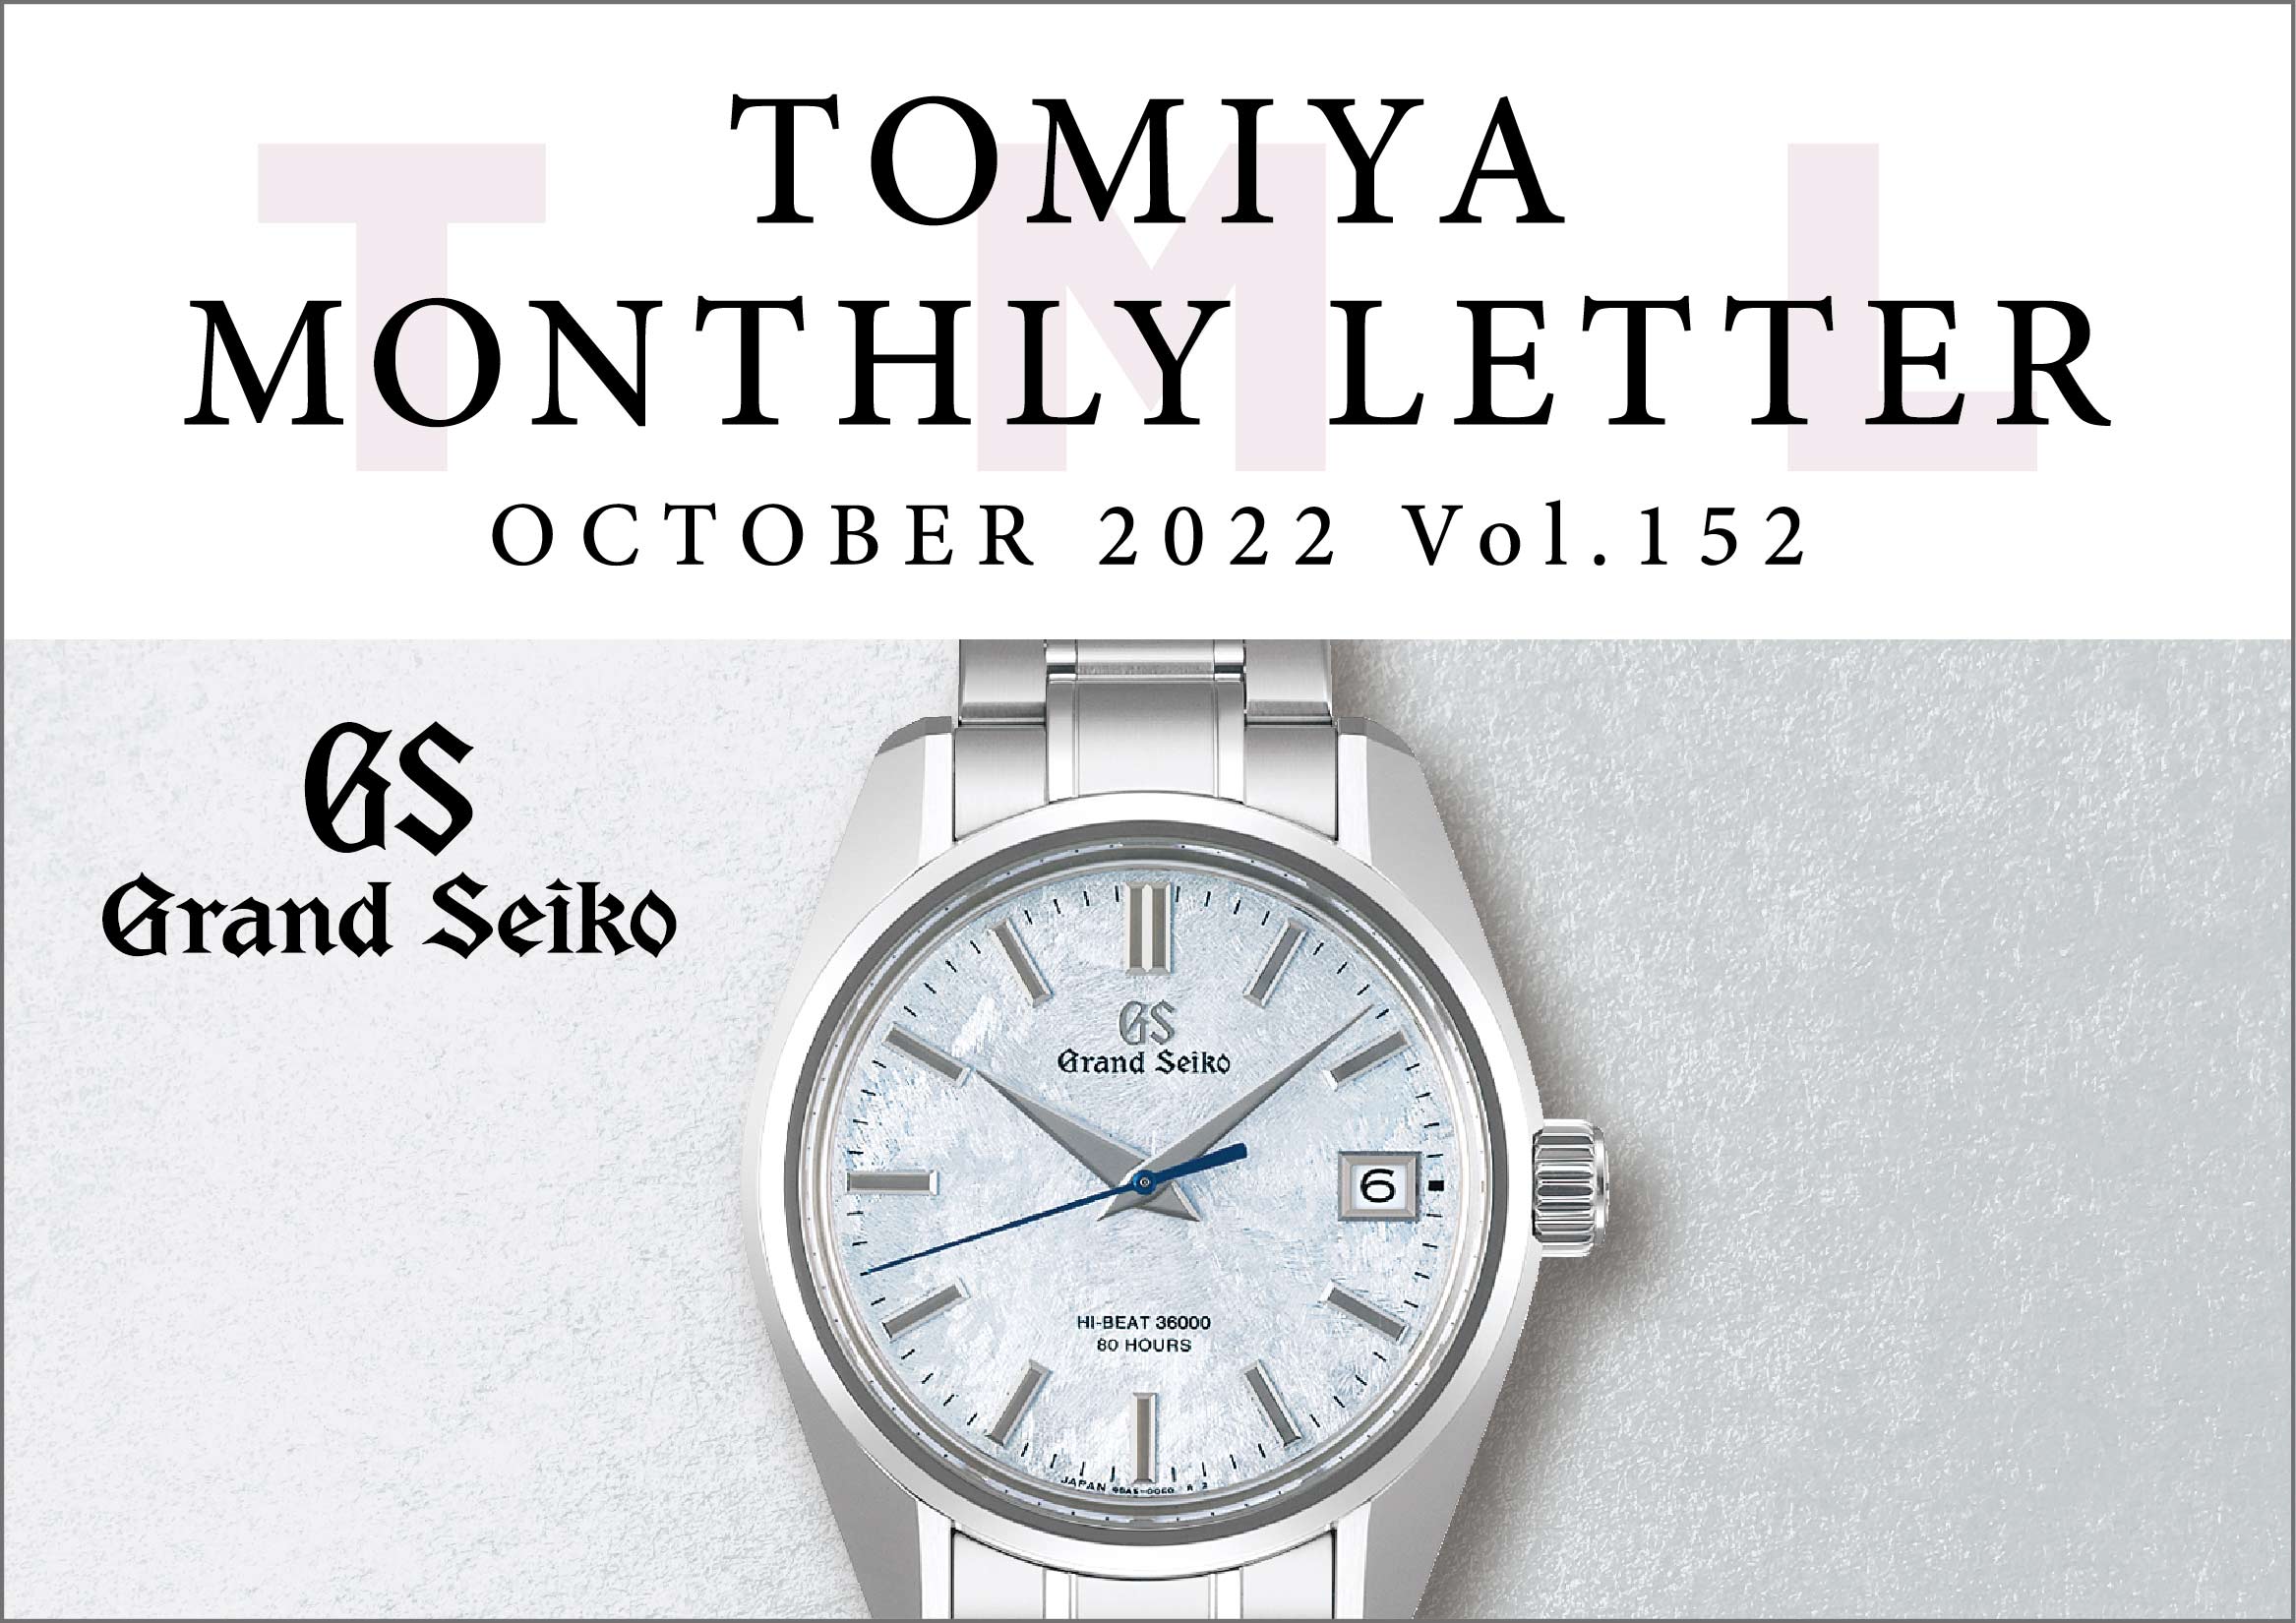 TOMIYA MONTHLY LETTER Vol.152